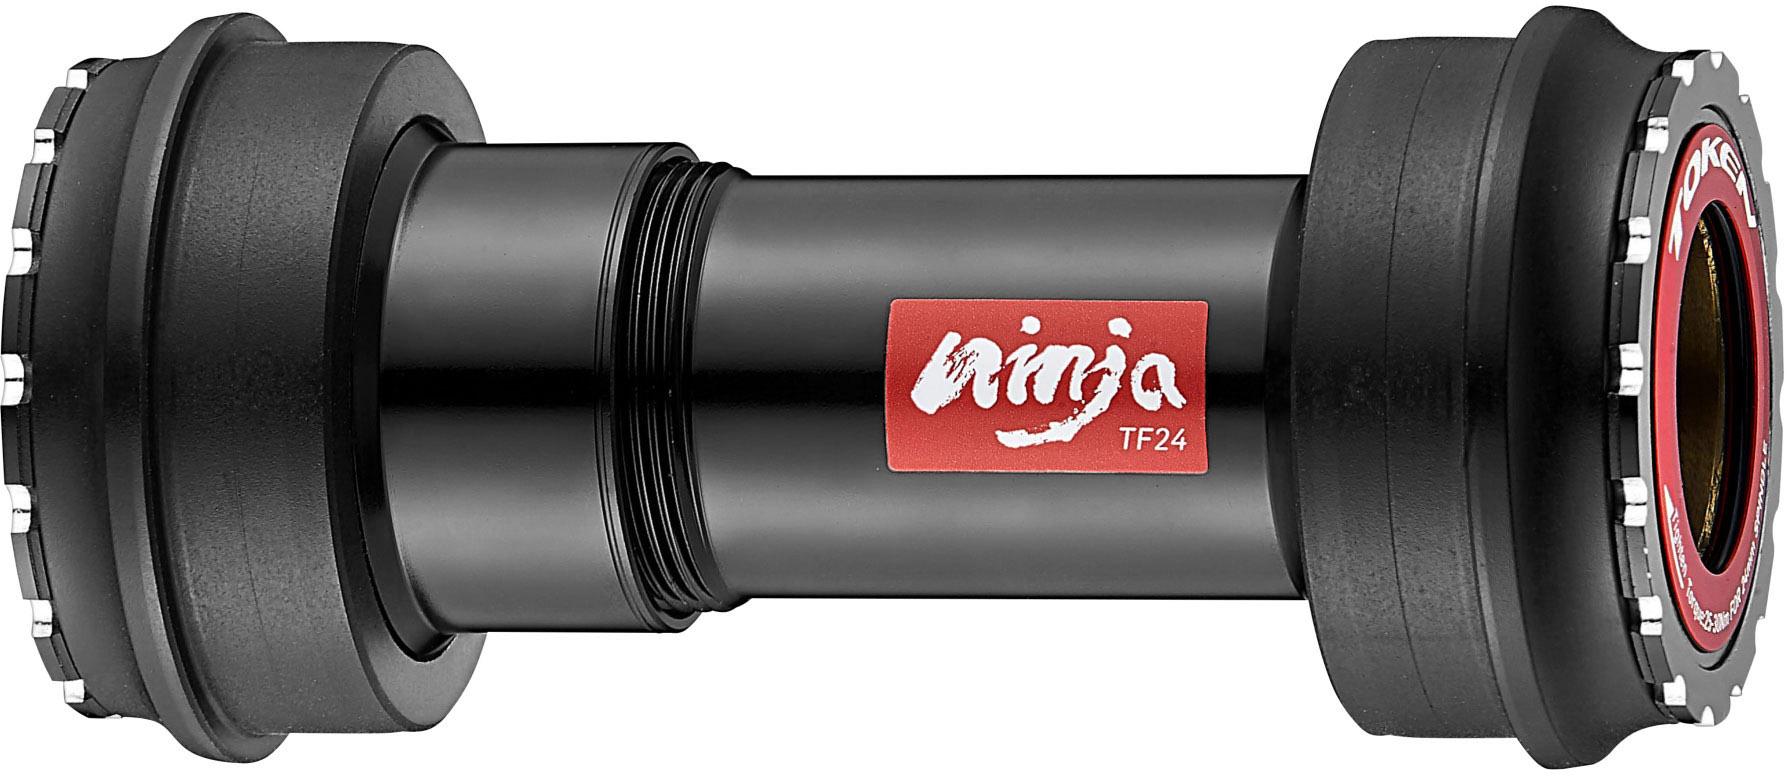 Token Ninja Pf30 Shimano 24mm Bottom Bracket - Black